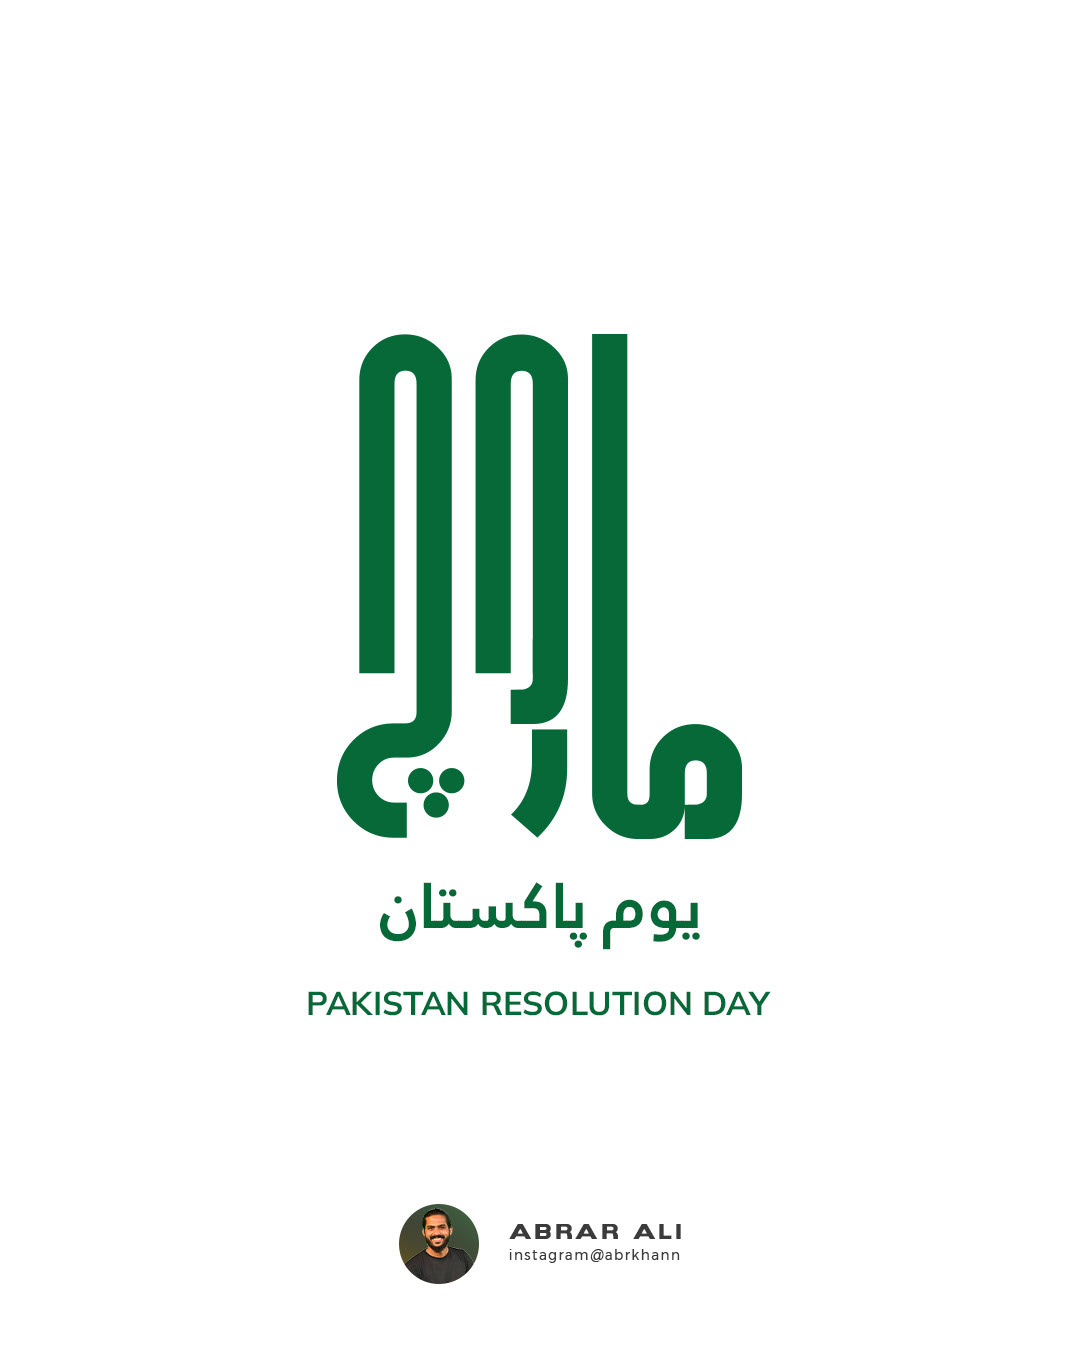 23rd March 23rd march pakistan 23rd march pakistan day Independence pak Pakistan pakistan day resolution day